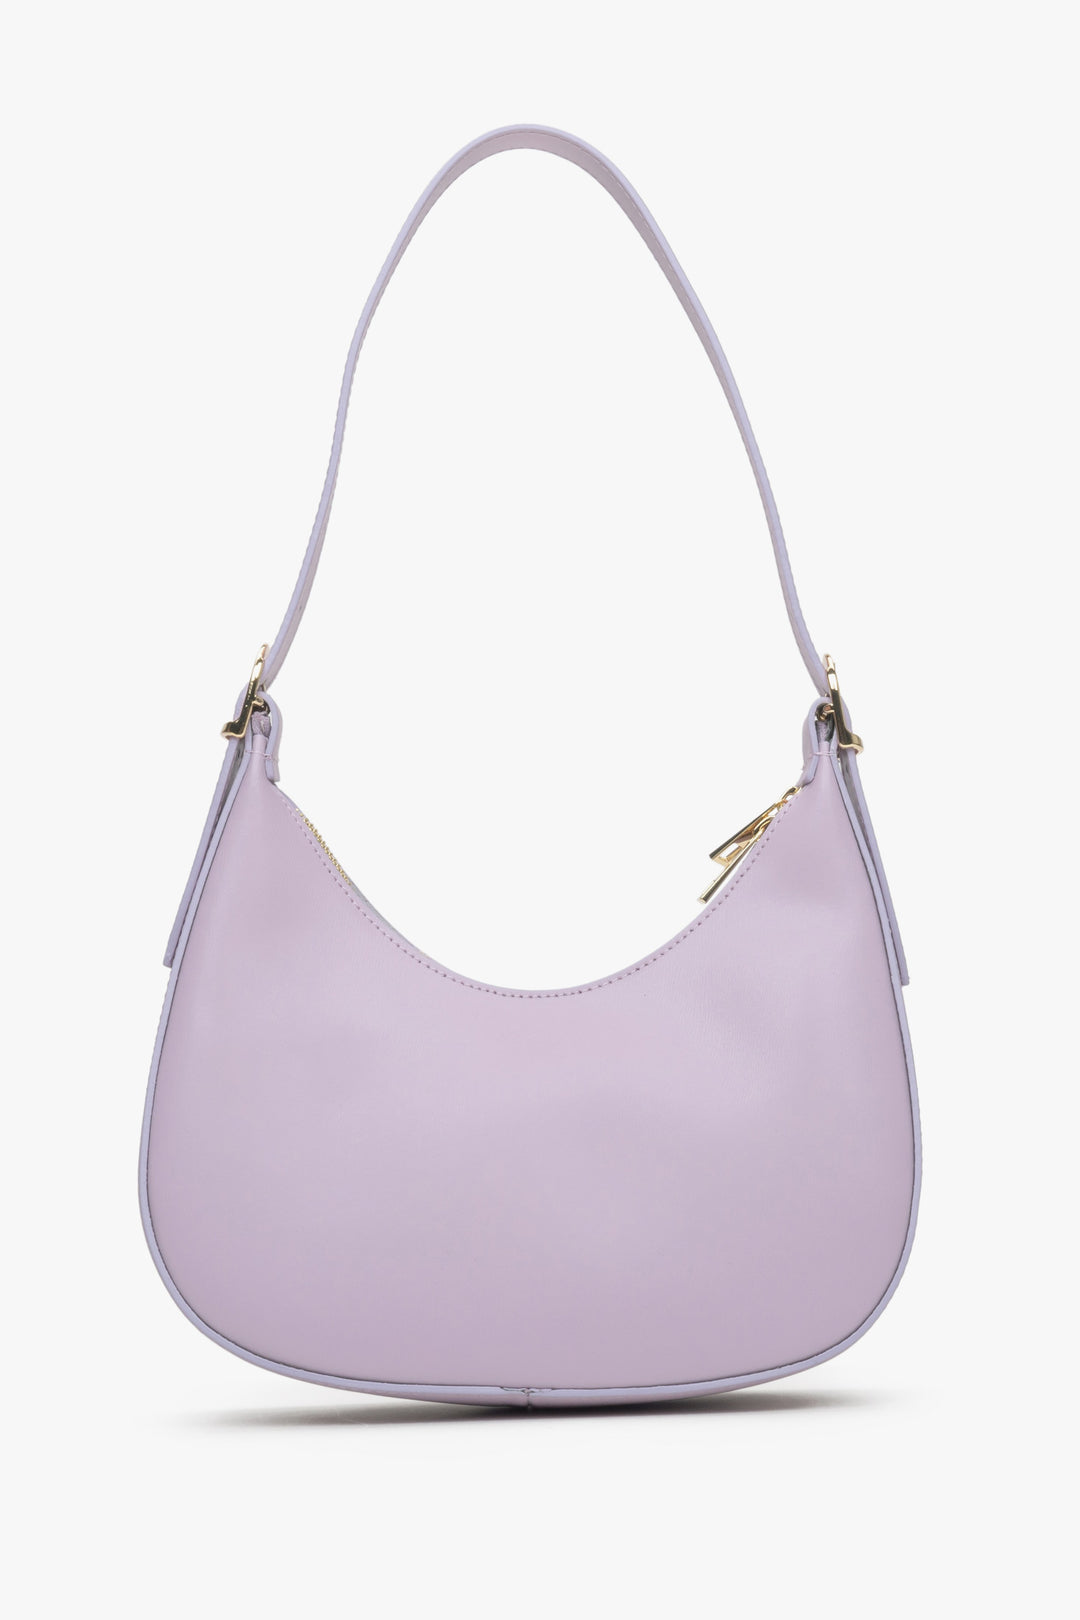 Women's purple Estro handbag made of Italian genuine leather.